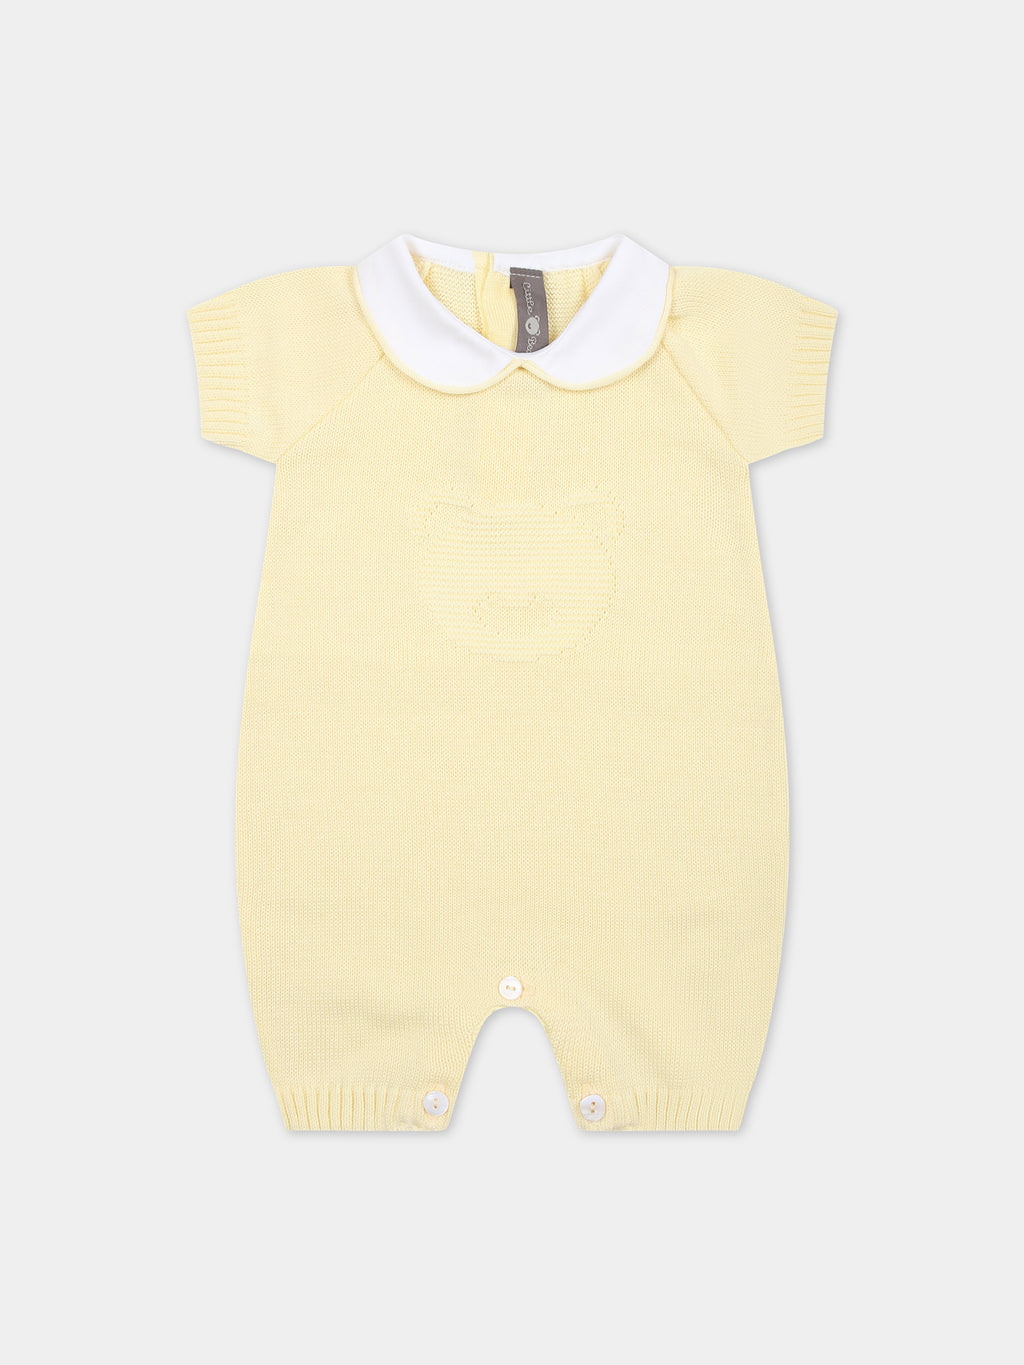 Yellow romper for baby kids